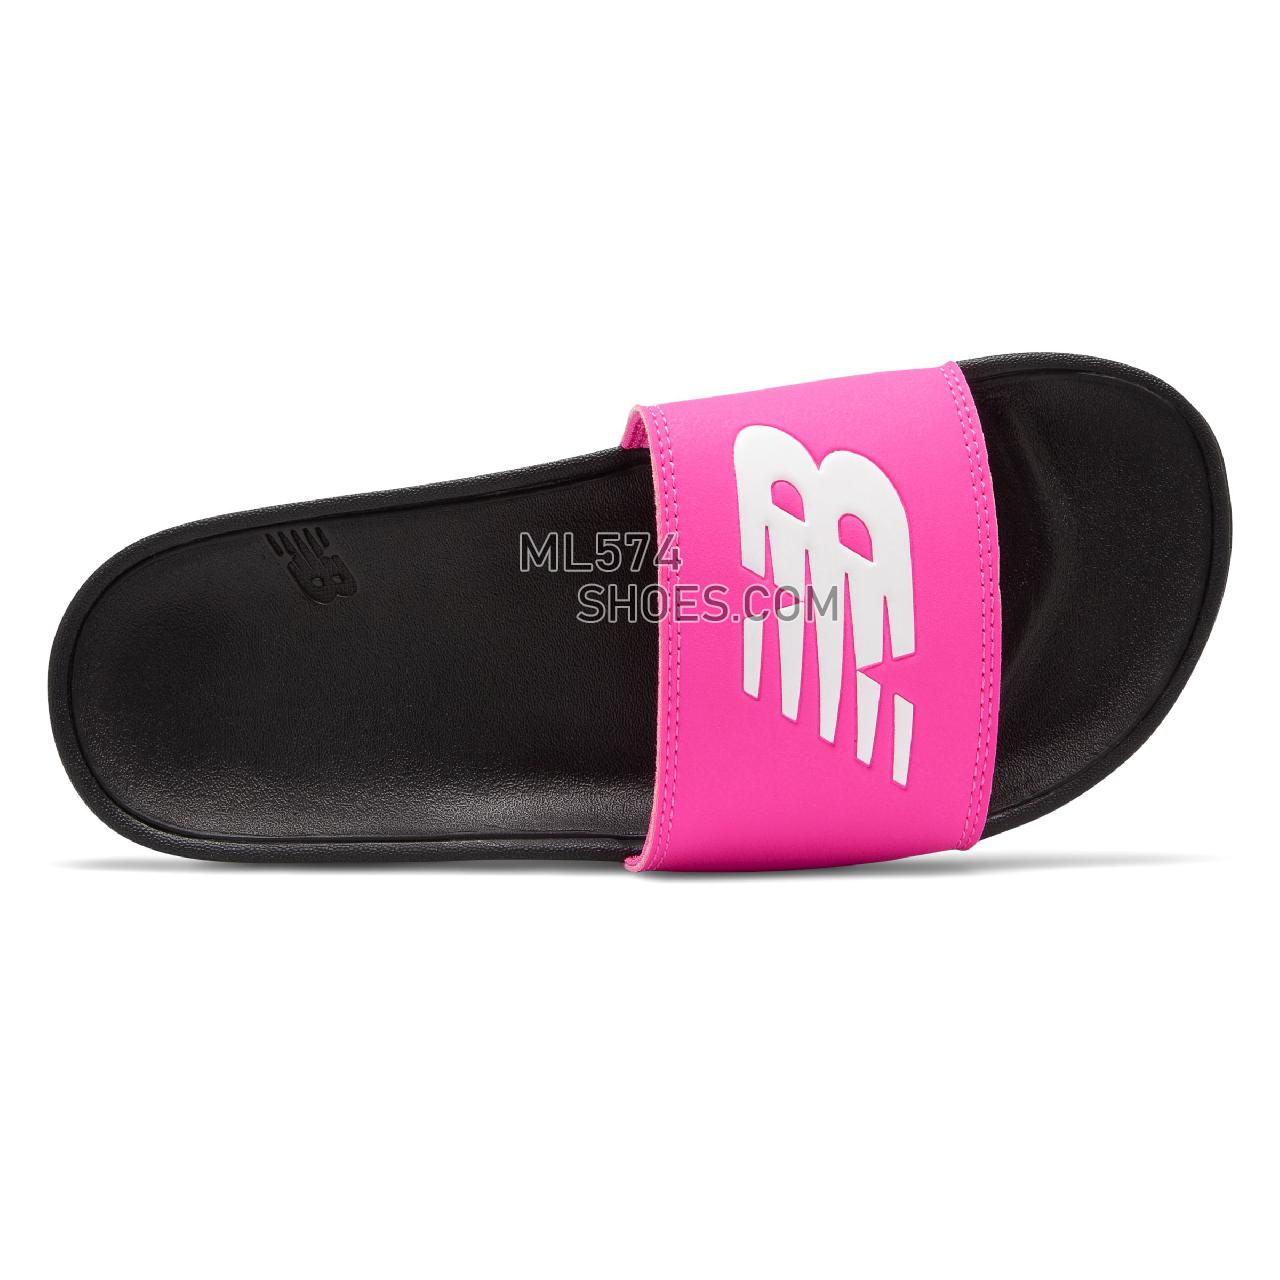 New Balance 200 - Women's Flip Flops - Black with Pink - SWF200P1